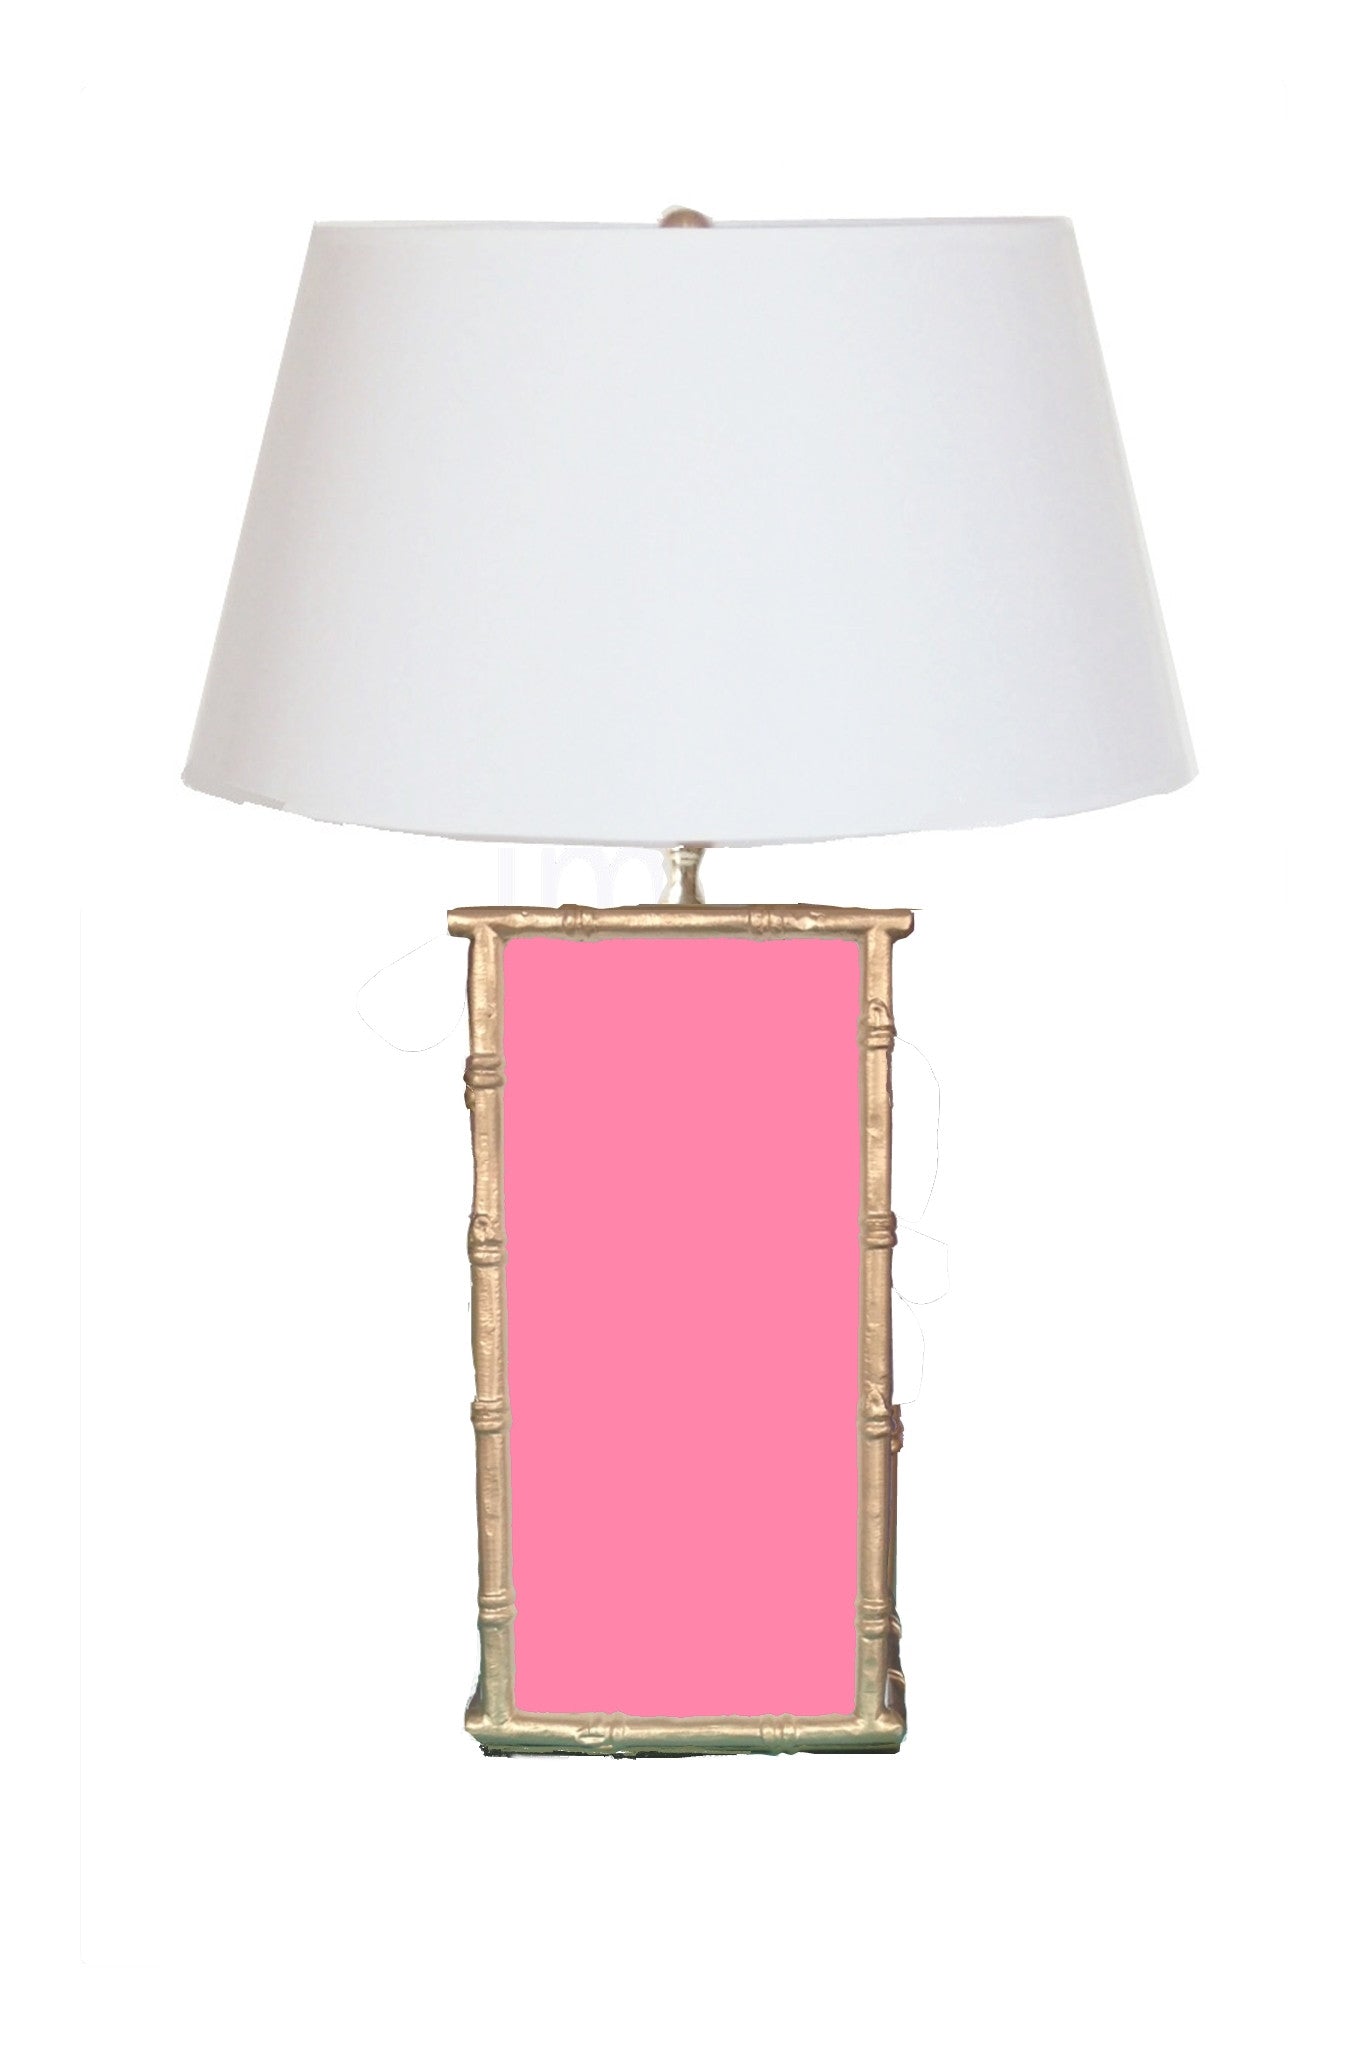 Dana Gibson Bamboo in Pink Lamp, 2ndQ